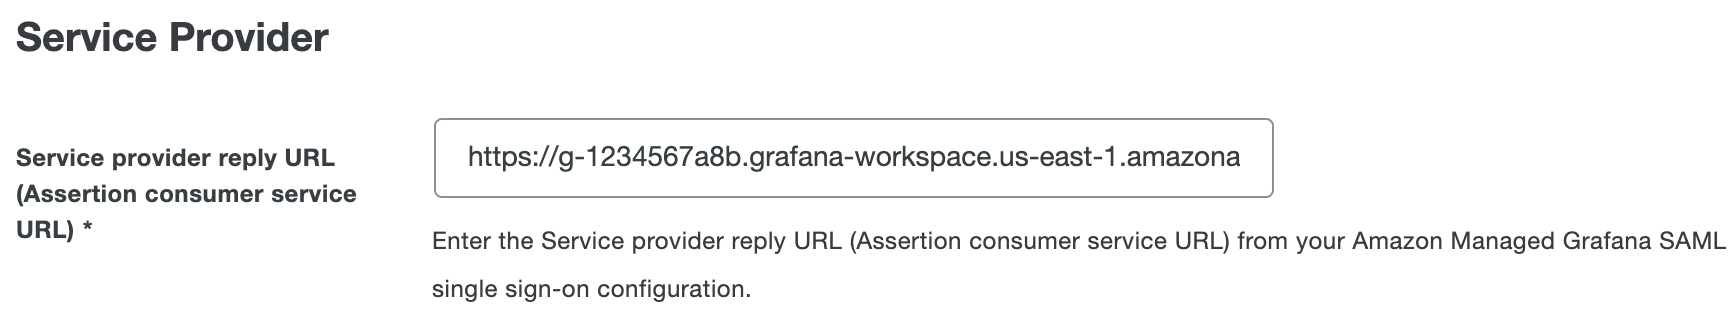 Duo Amazon Managed Grafana Service Provider Reply URL